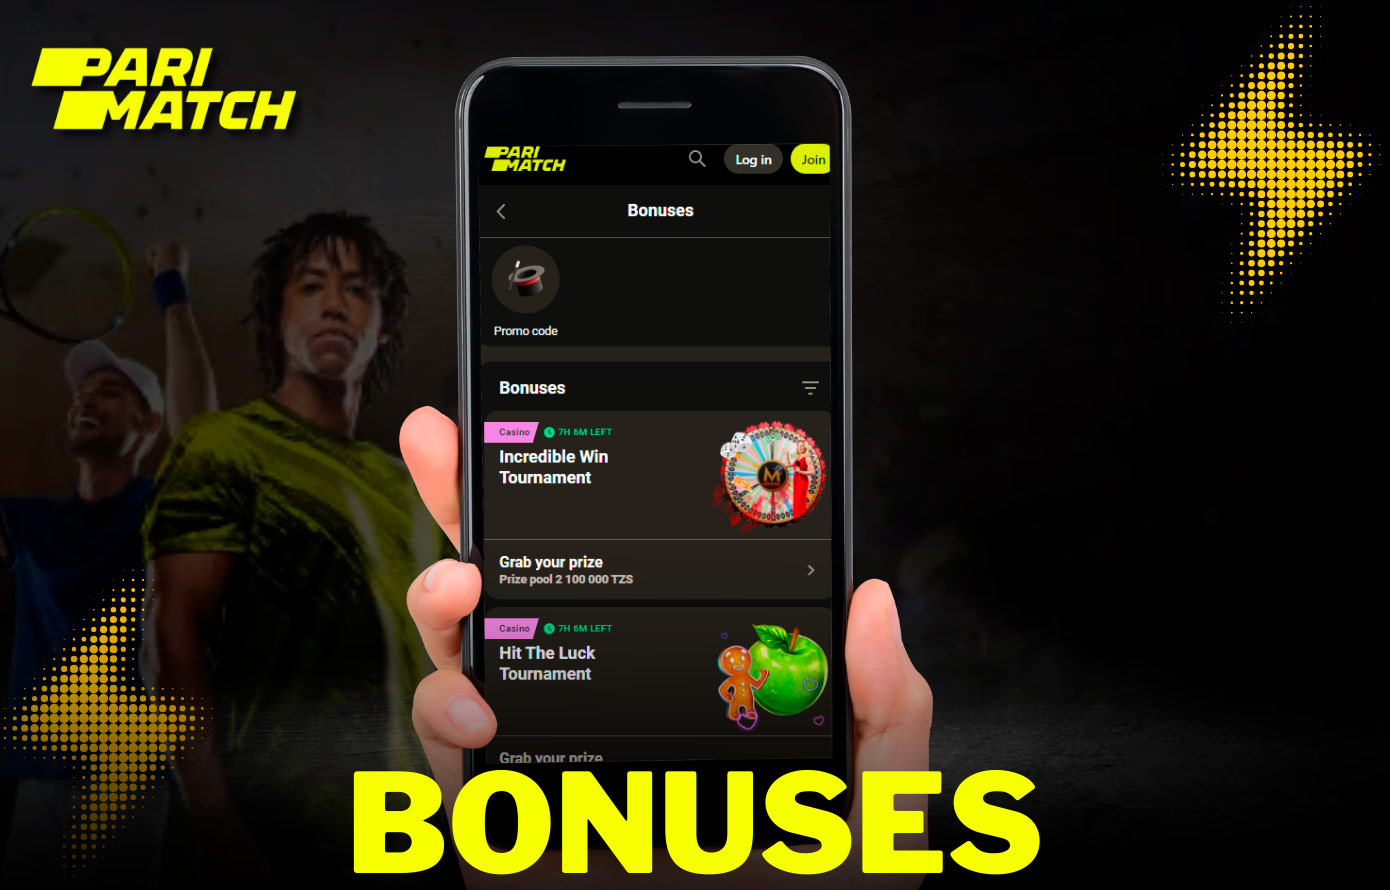 Choice of bonuses with the Parimatch app